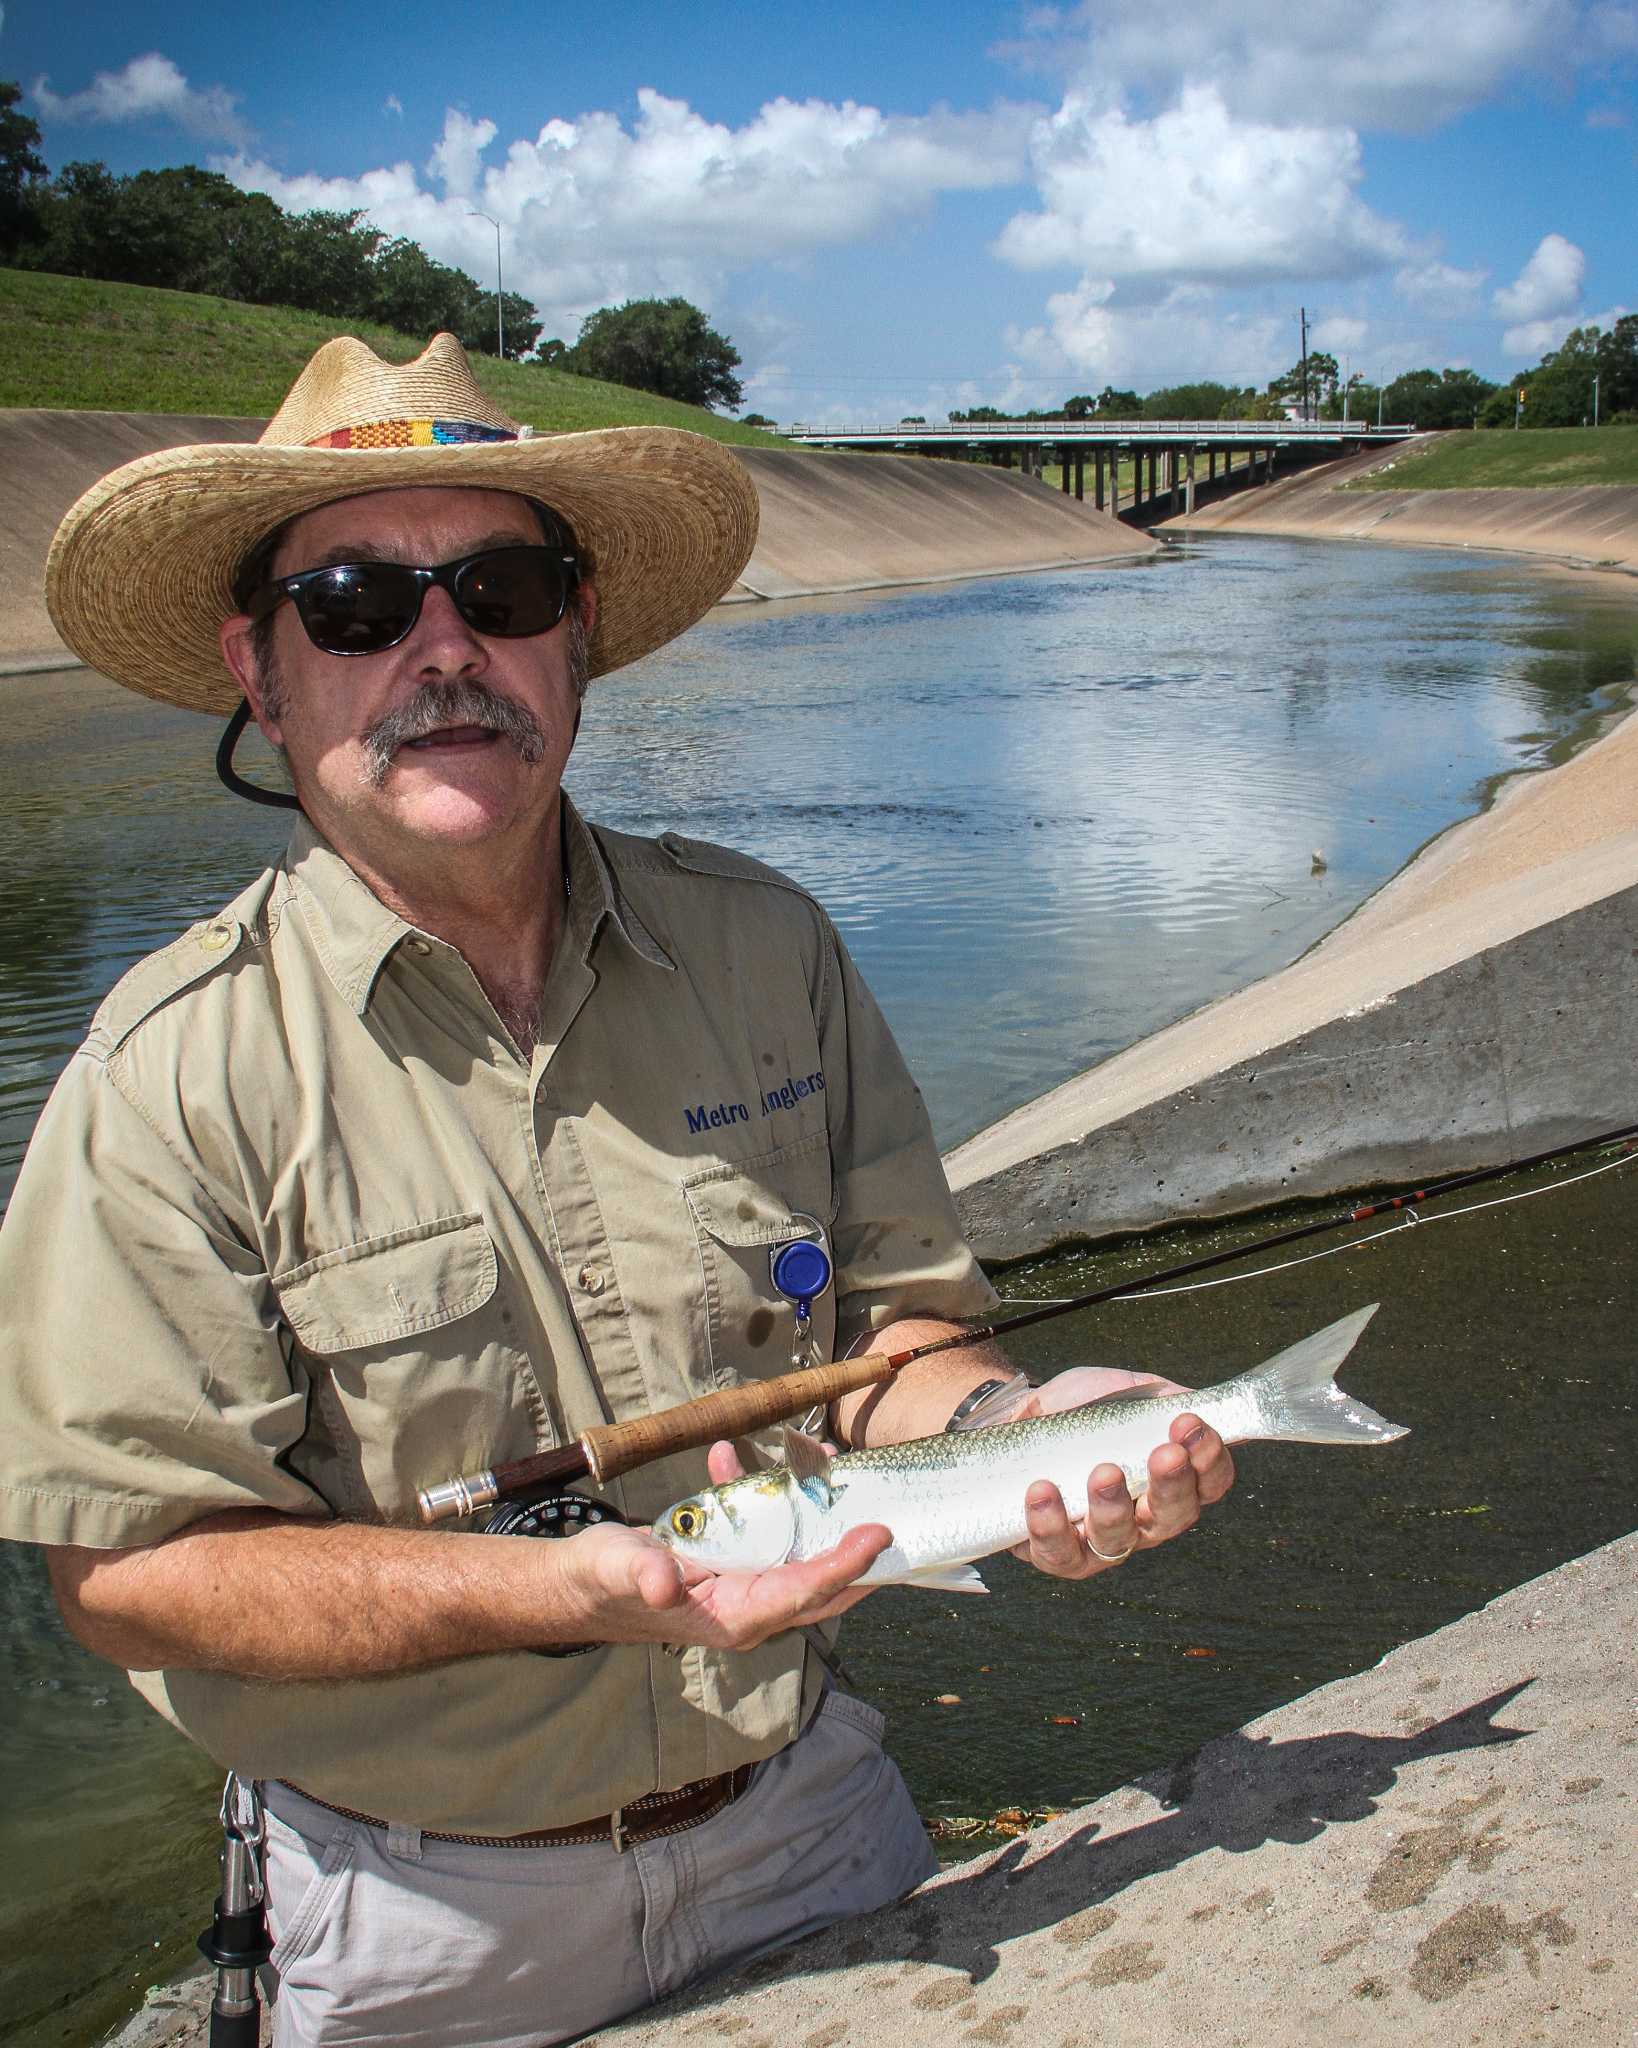 Houston's urban bayous hold fishing surprises